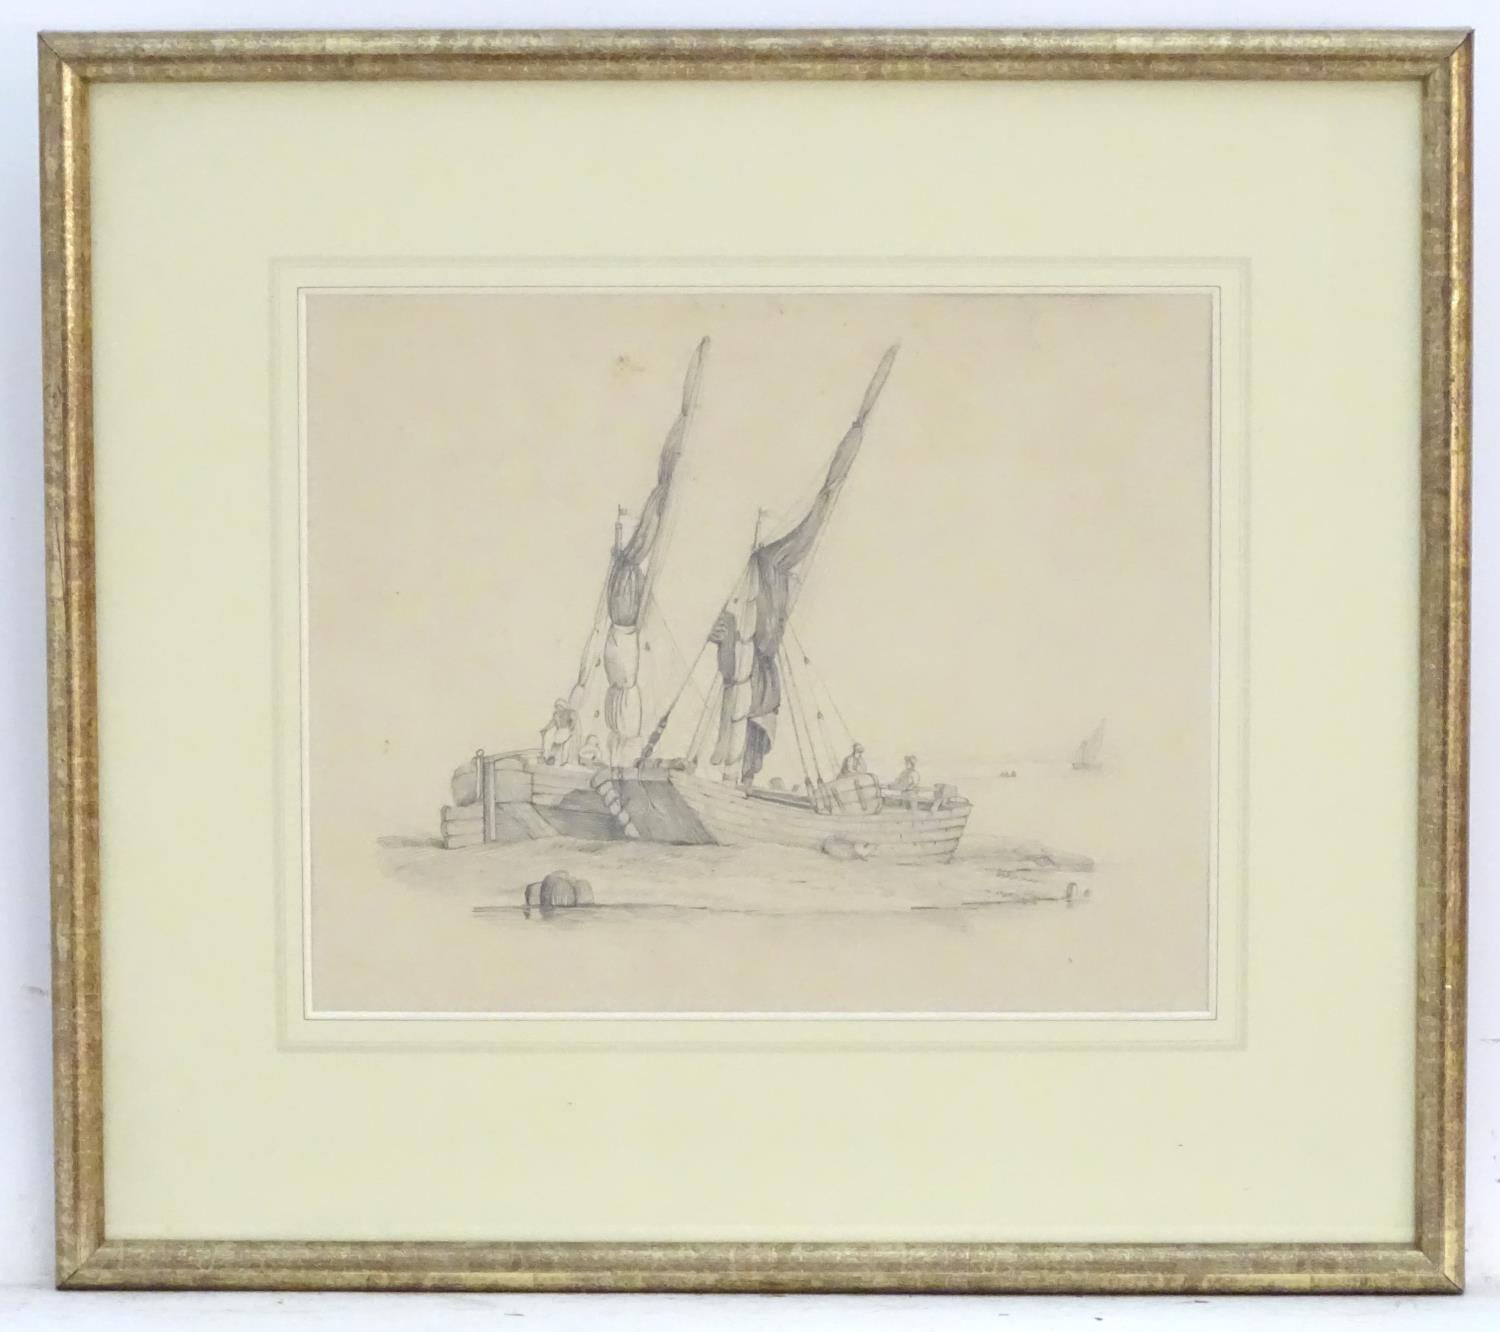 Attrib. J. B. Ladbrooke (1803-1879), Pencil on paper, English Marine School, A seascape scene with